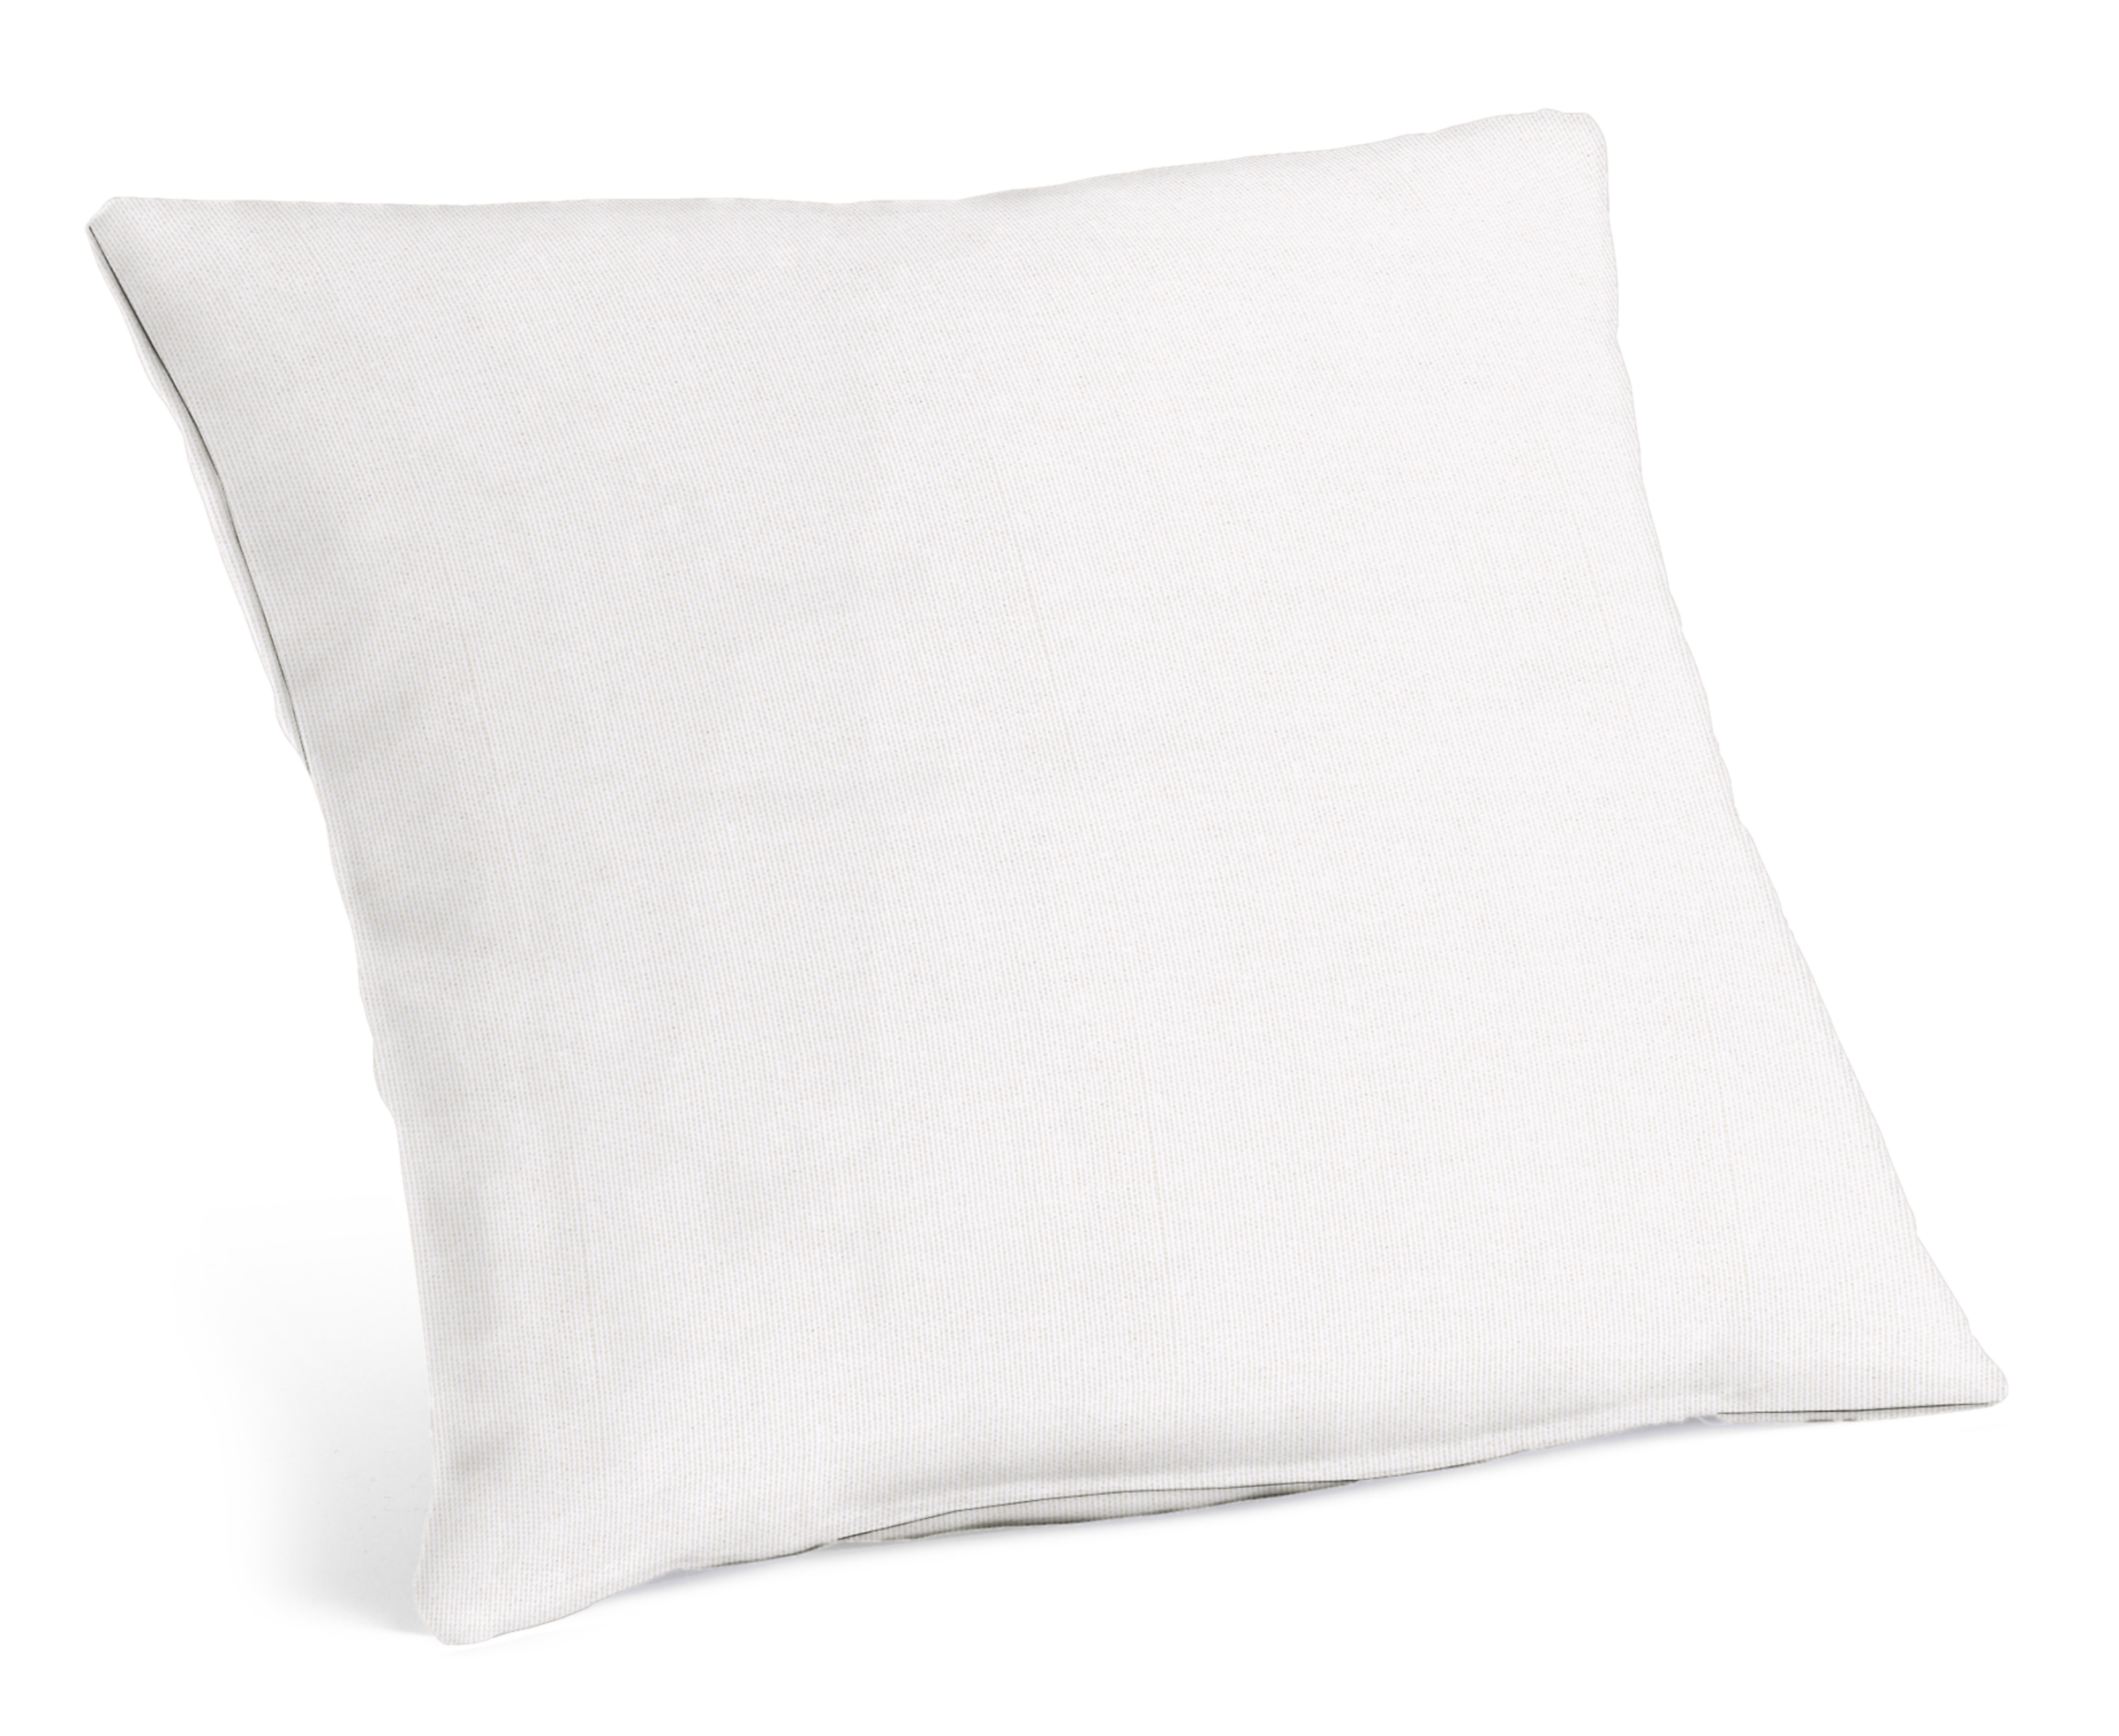 Hue 20w 20h Outdoor Pillow in Sunbrella Canvas White